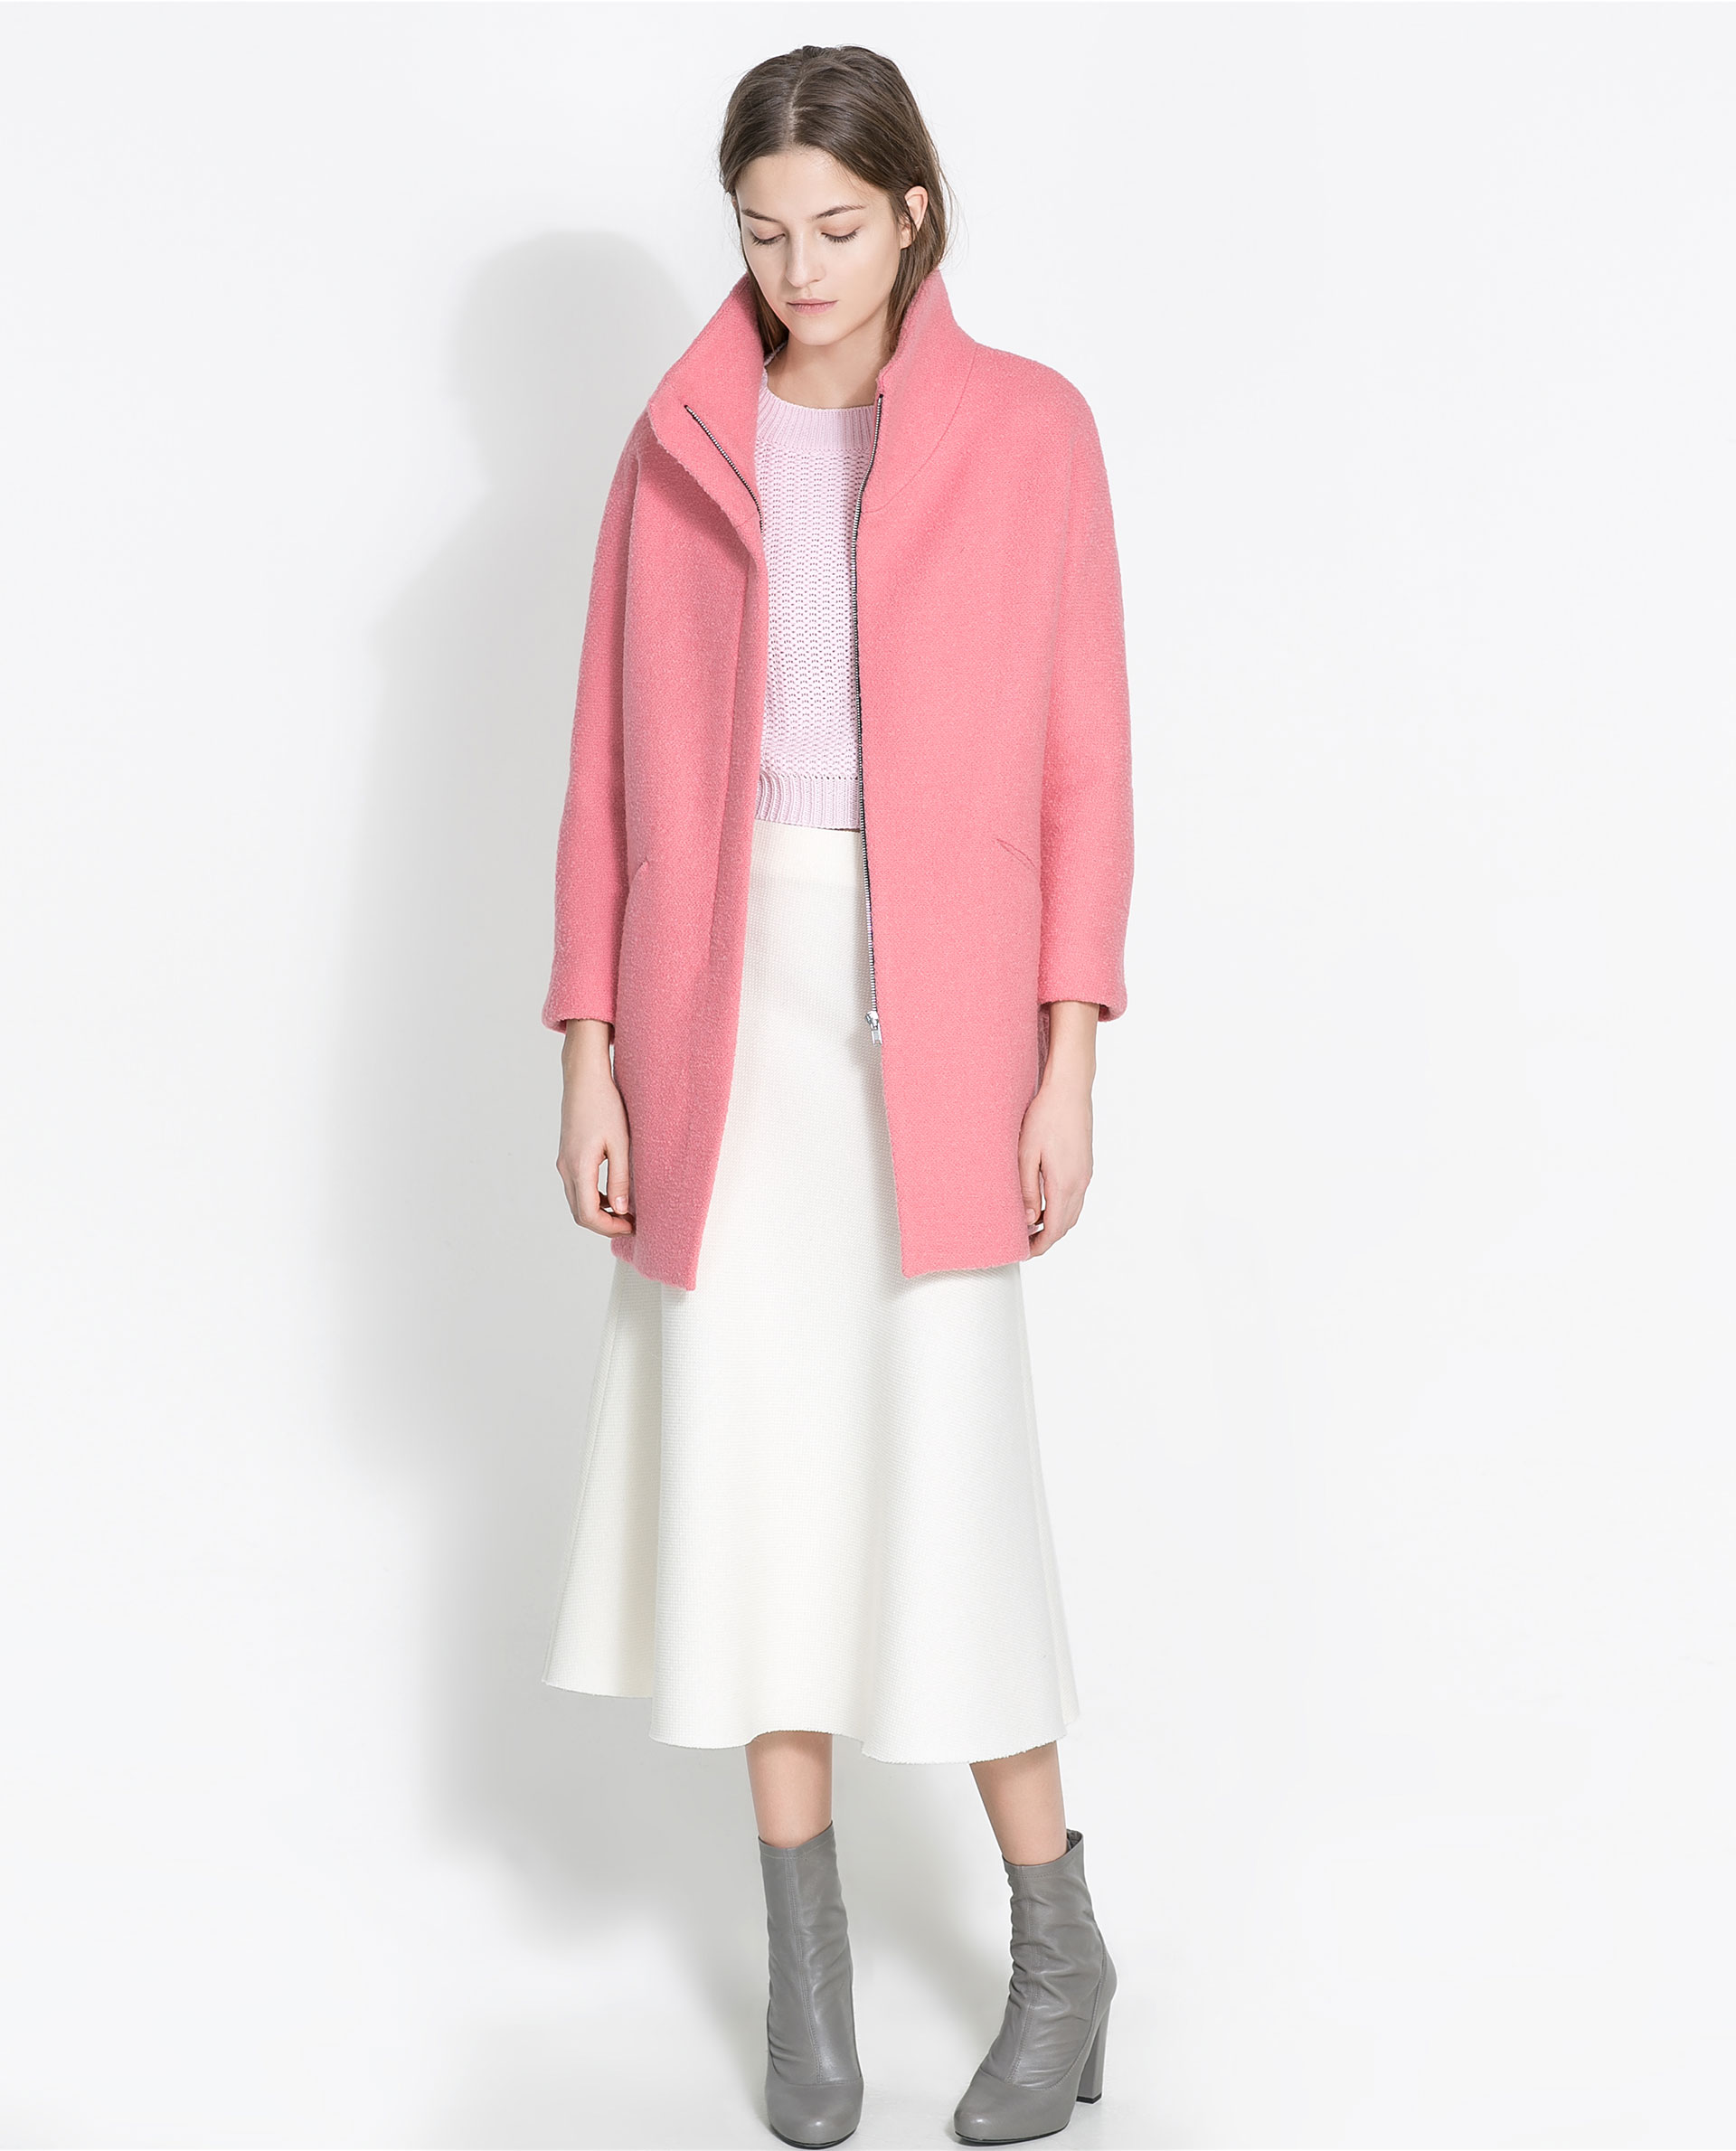 Zara BouclÃ© Coat in Pink